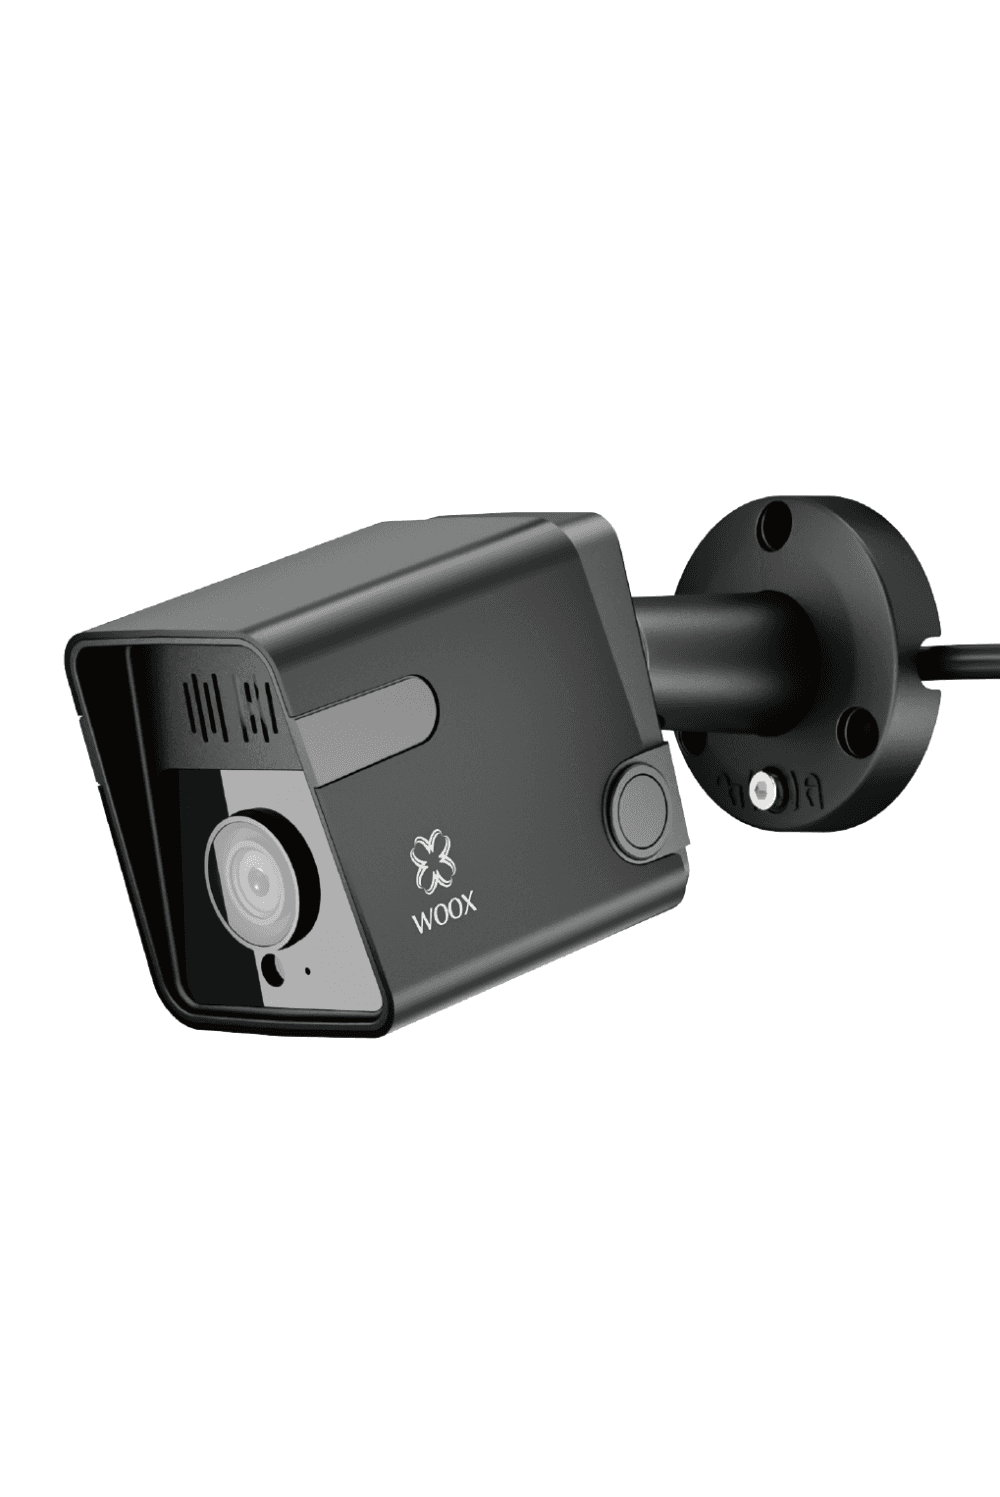 Woox R3568 outdoor 3MP camera